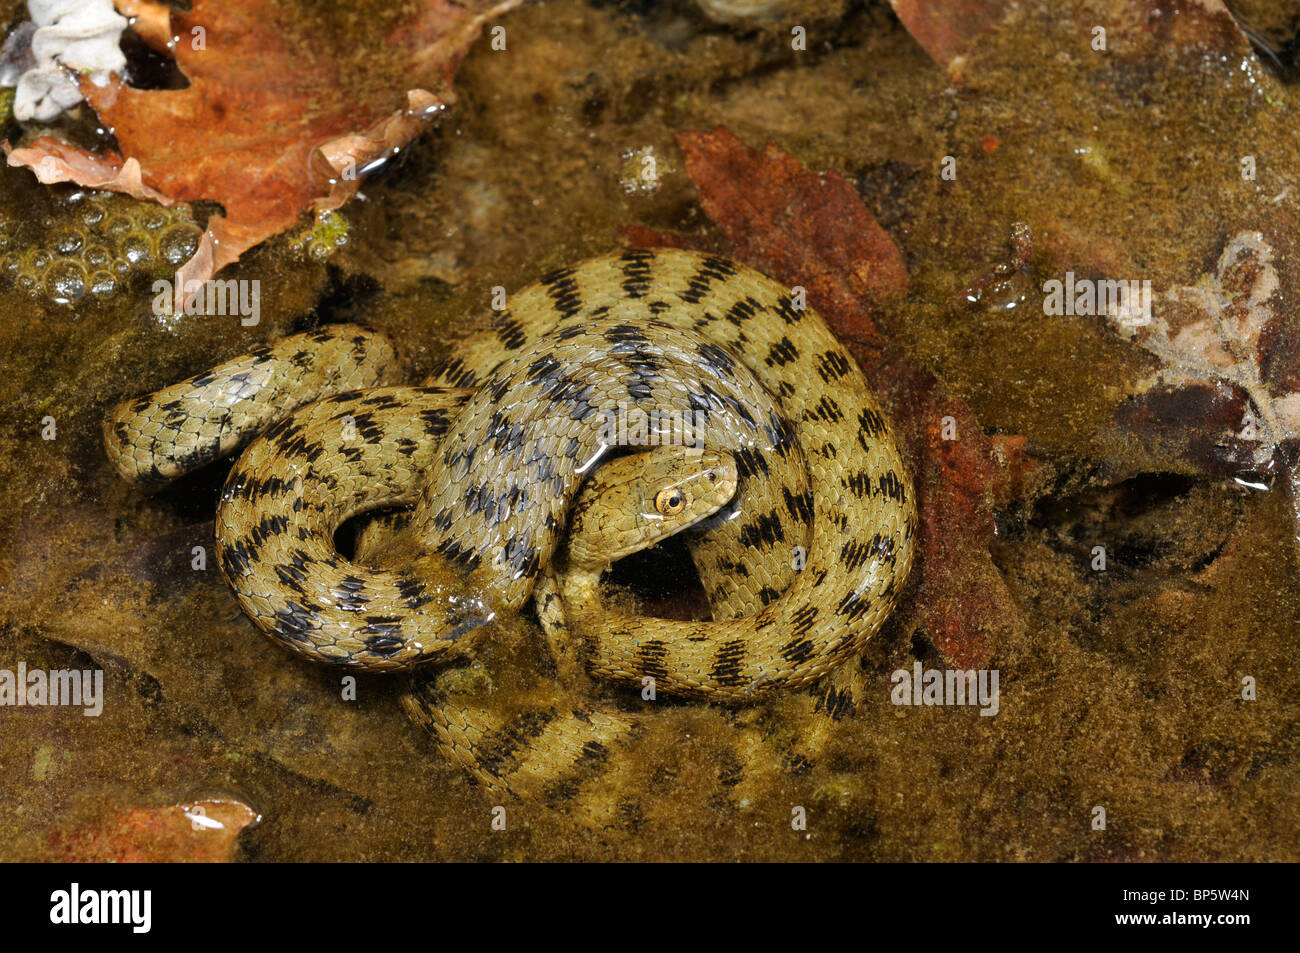 Snake (Natrix tessellata dés), en eau peu profonde, la Grèce, le Creta, Grèce Banque D'Images